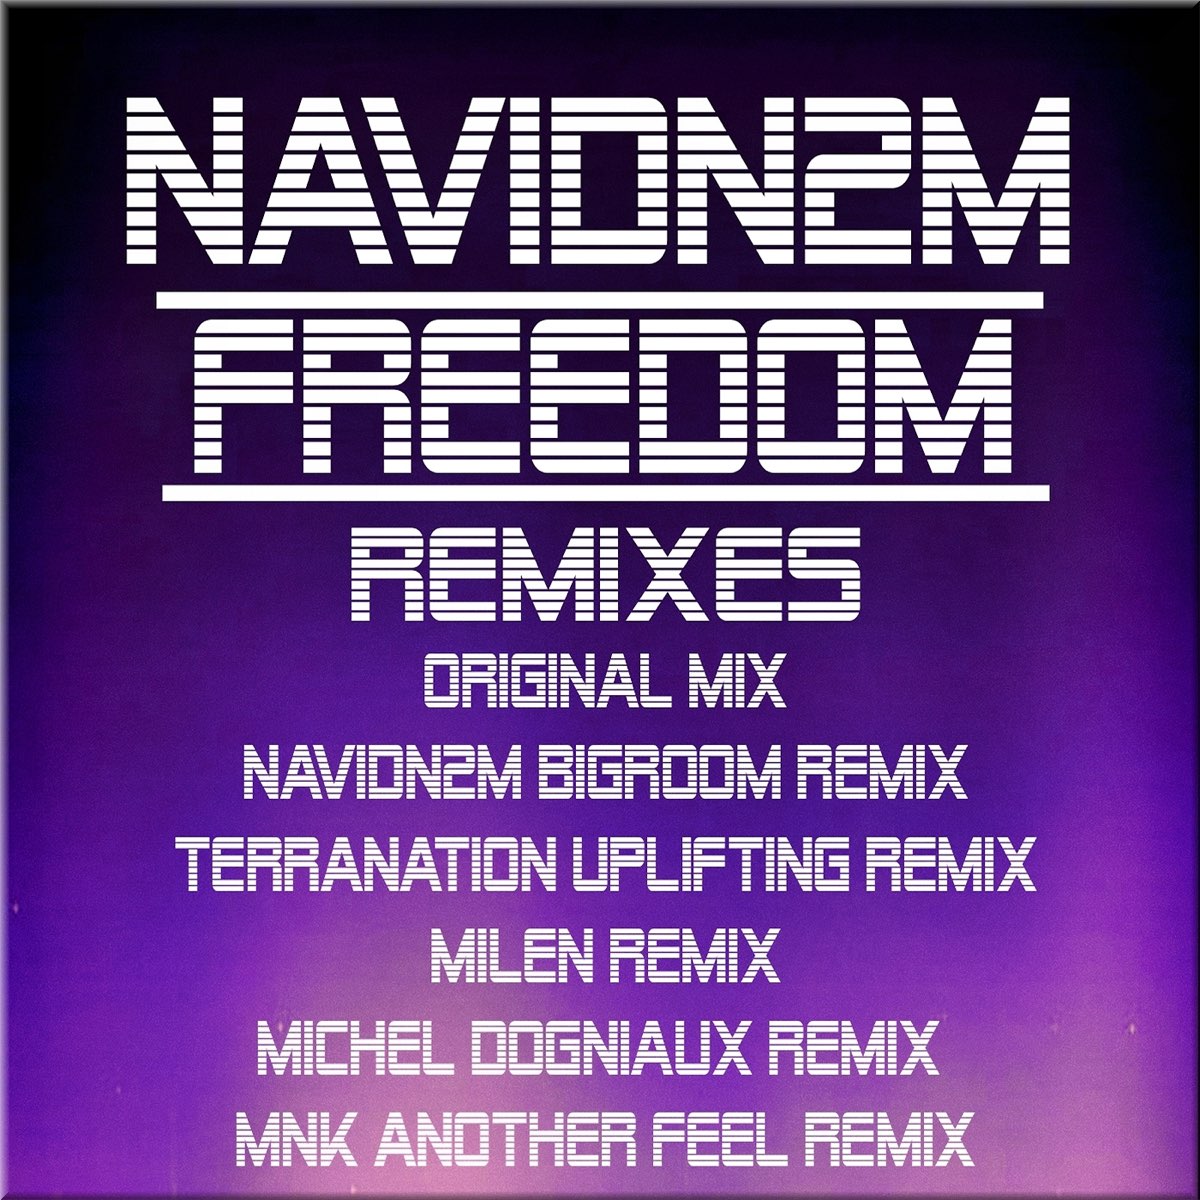 Remix Freedom. 7 A.M. Remix.